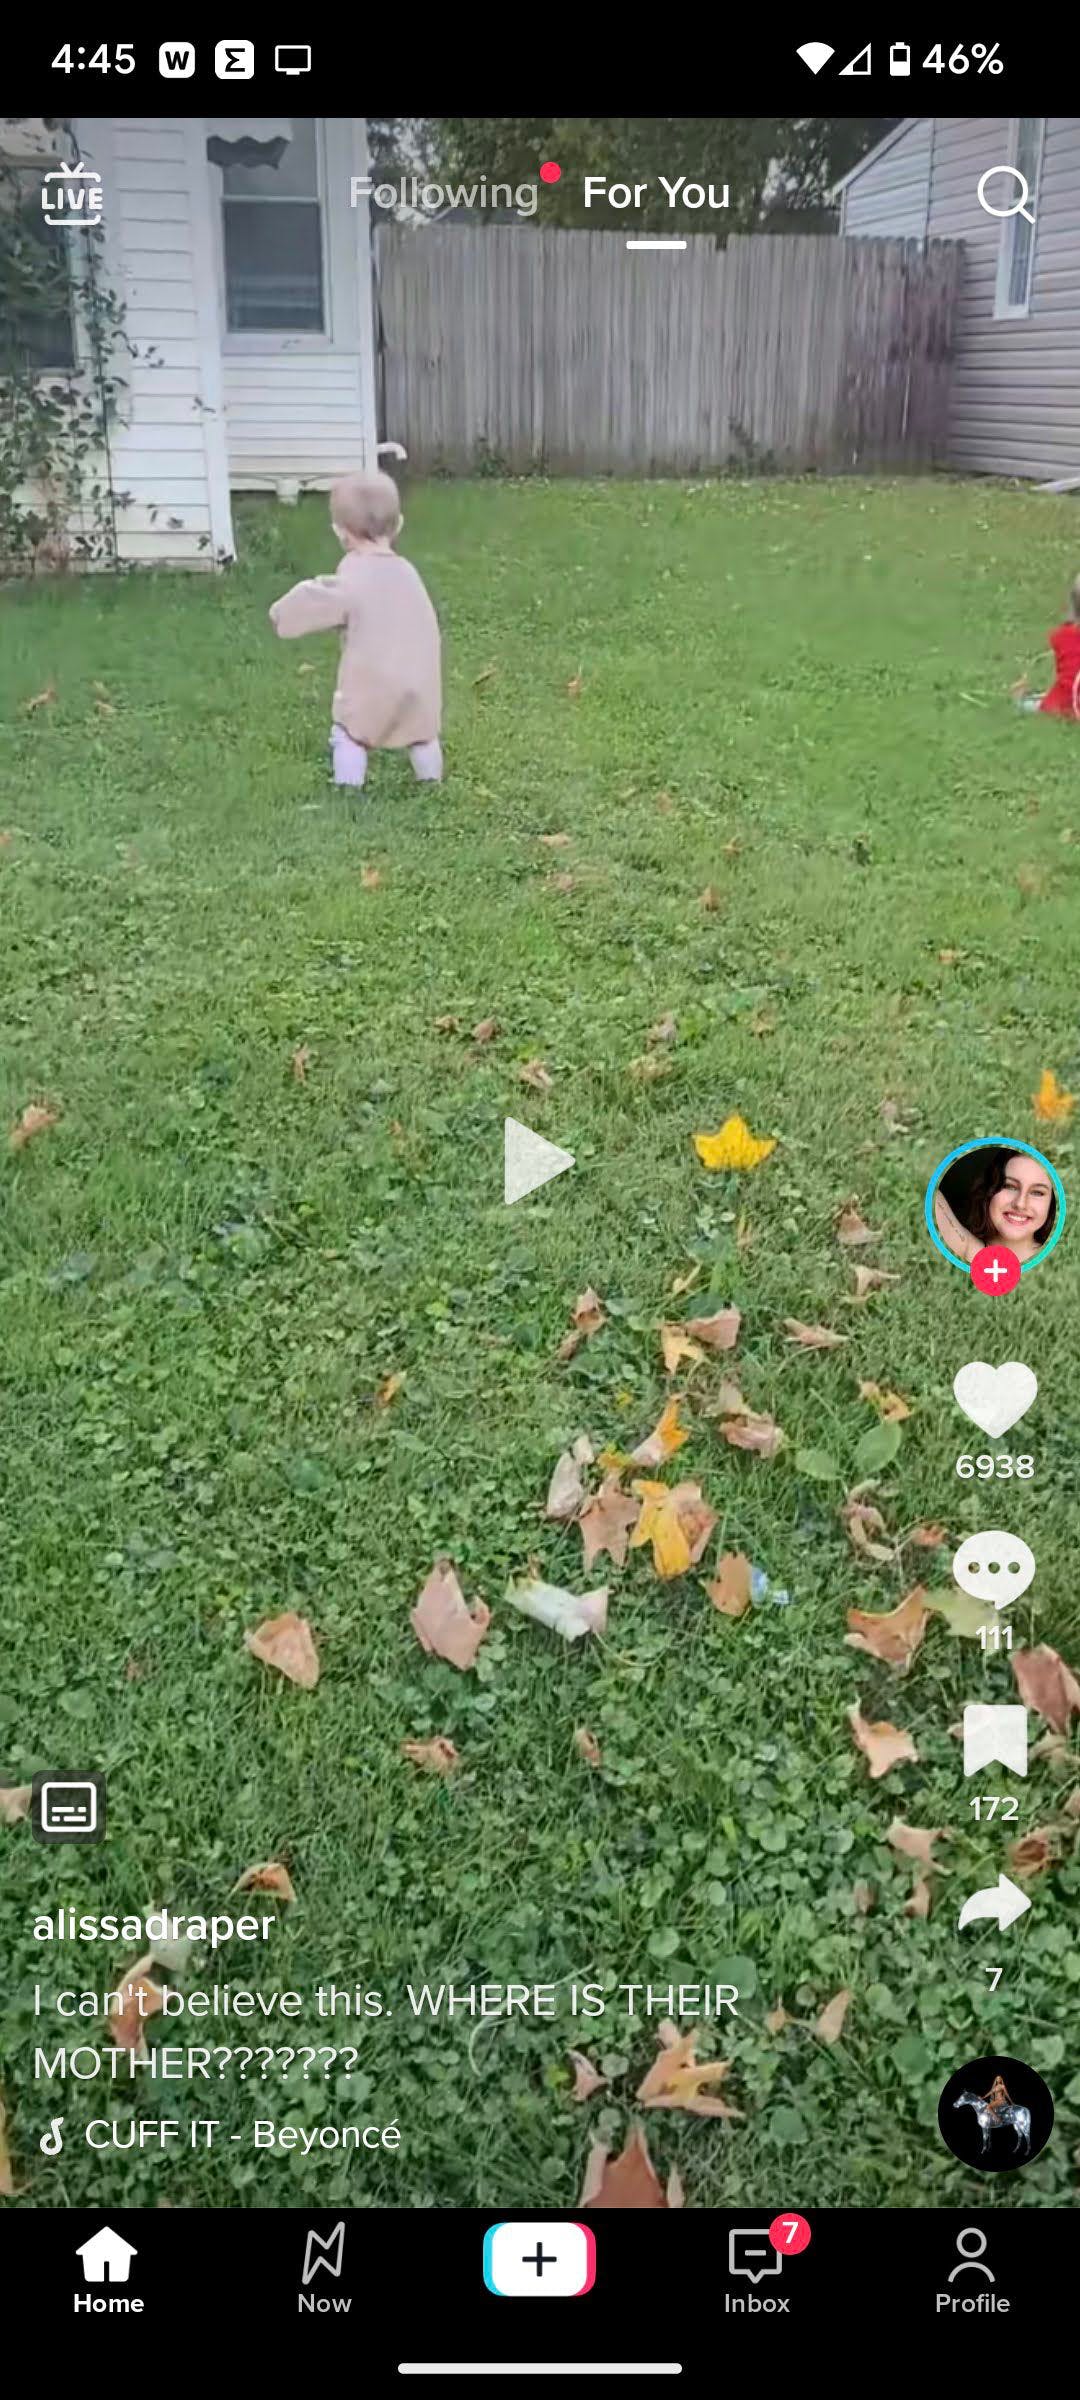 TikTok screen showing baby on lawn